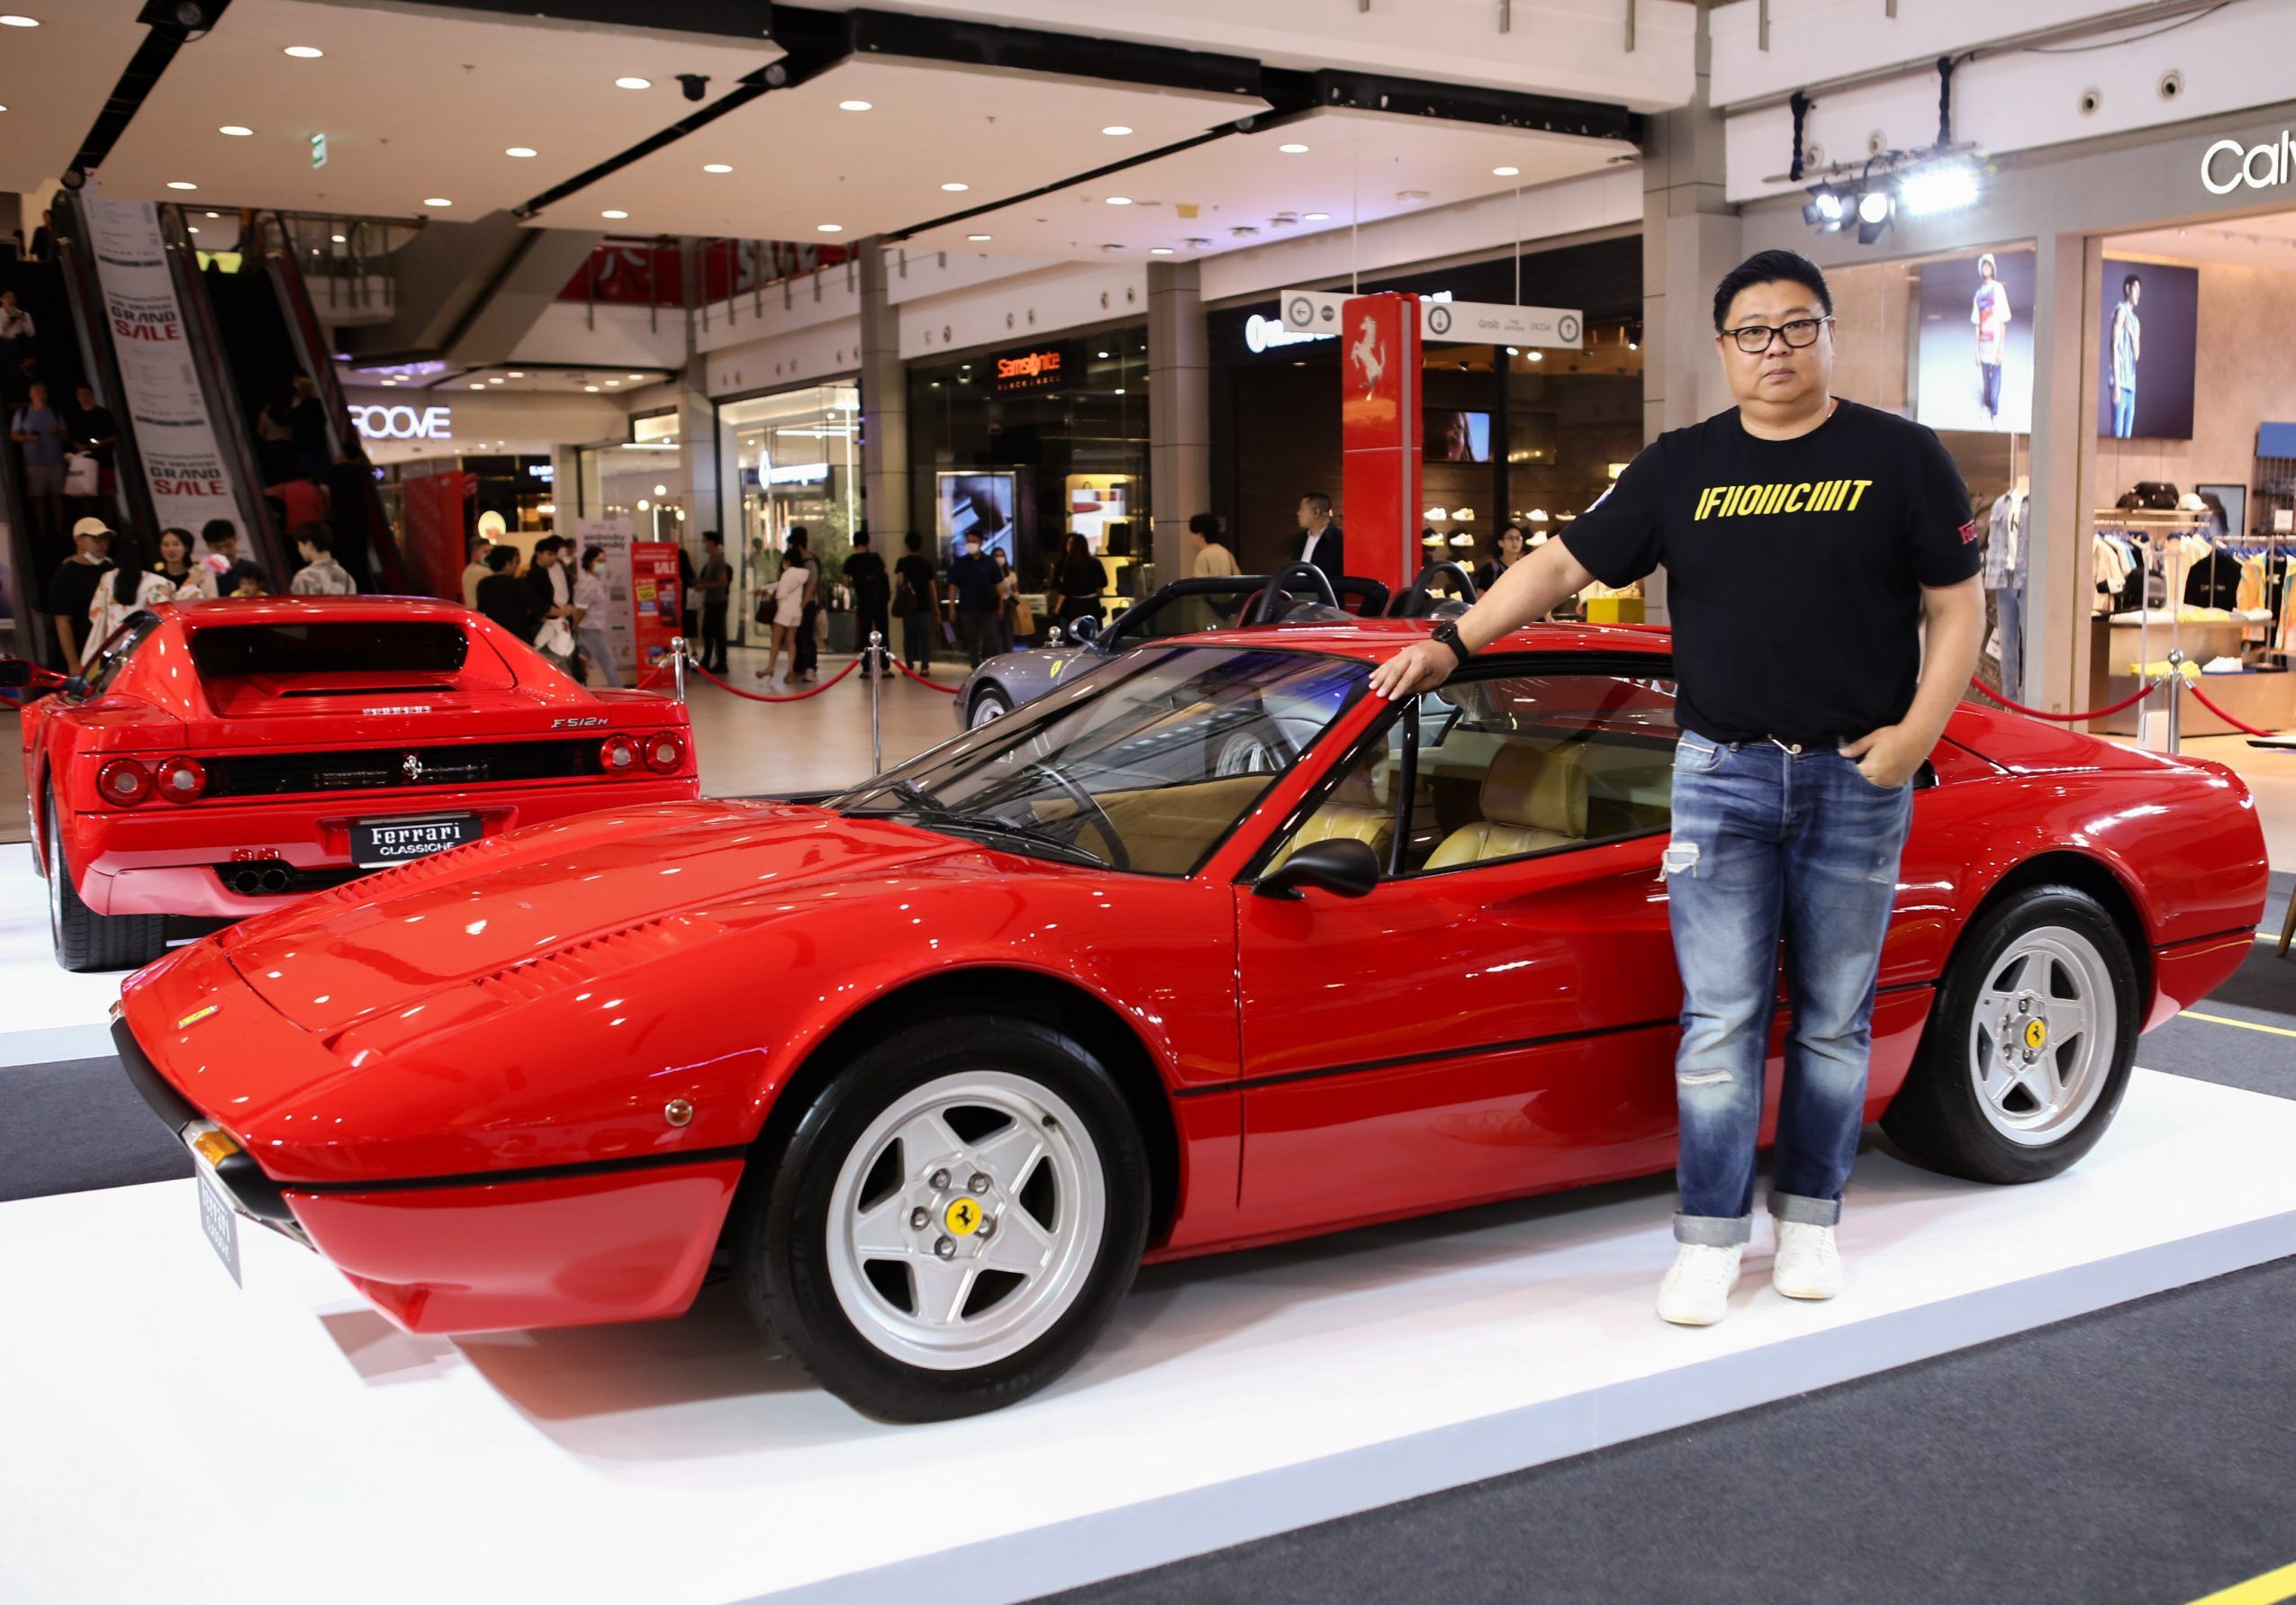 Ferrari Classiche Fair 2023